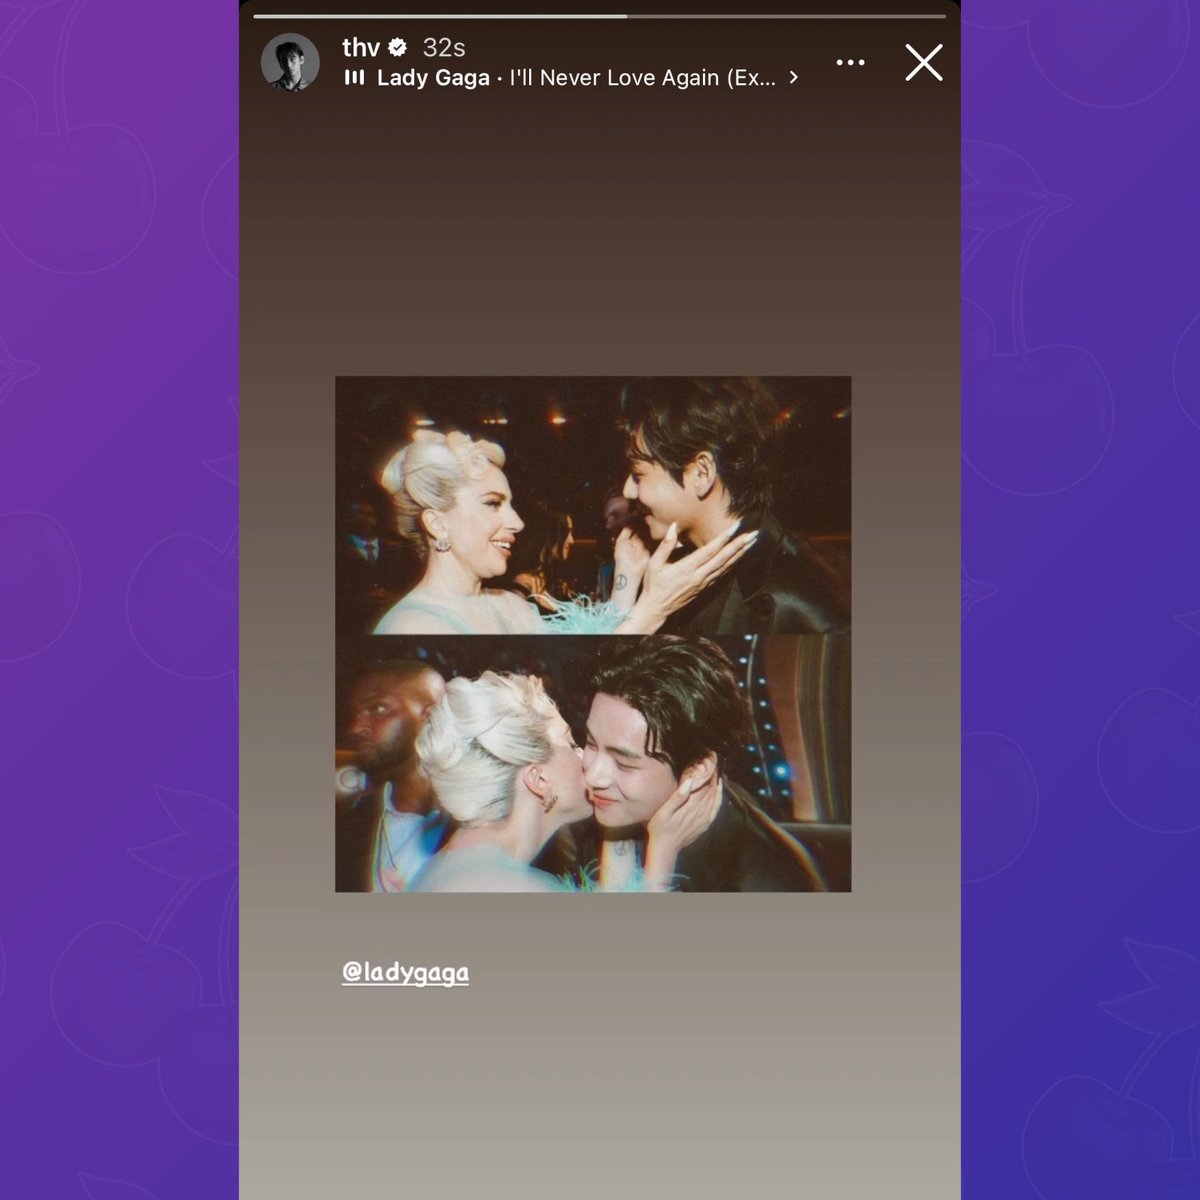 Taehyung of BTS shares throwback photos with Lady Gaga at the 2022 Grammys.